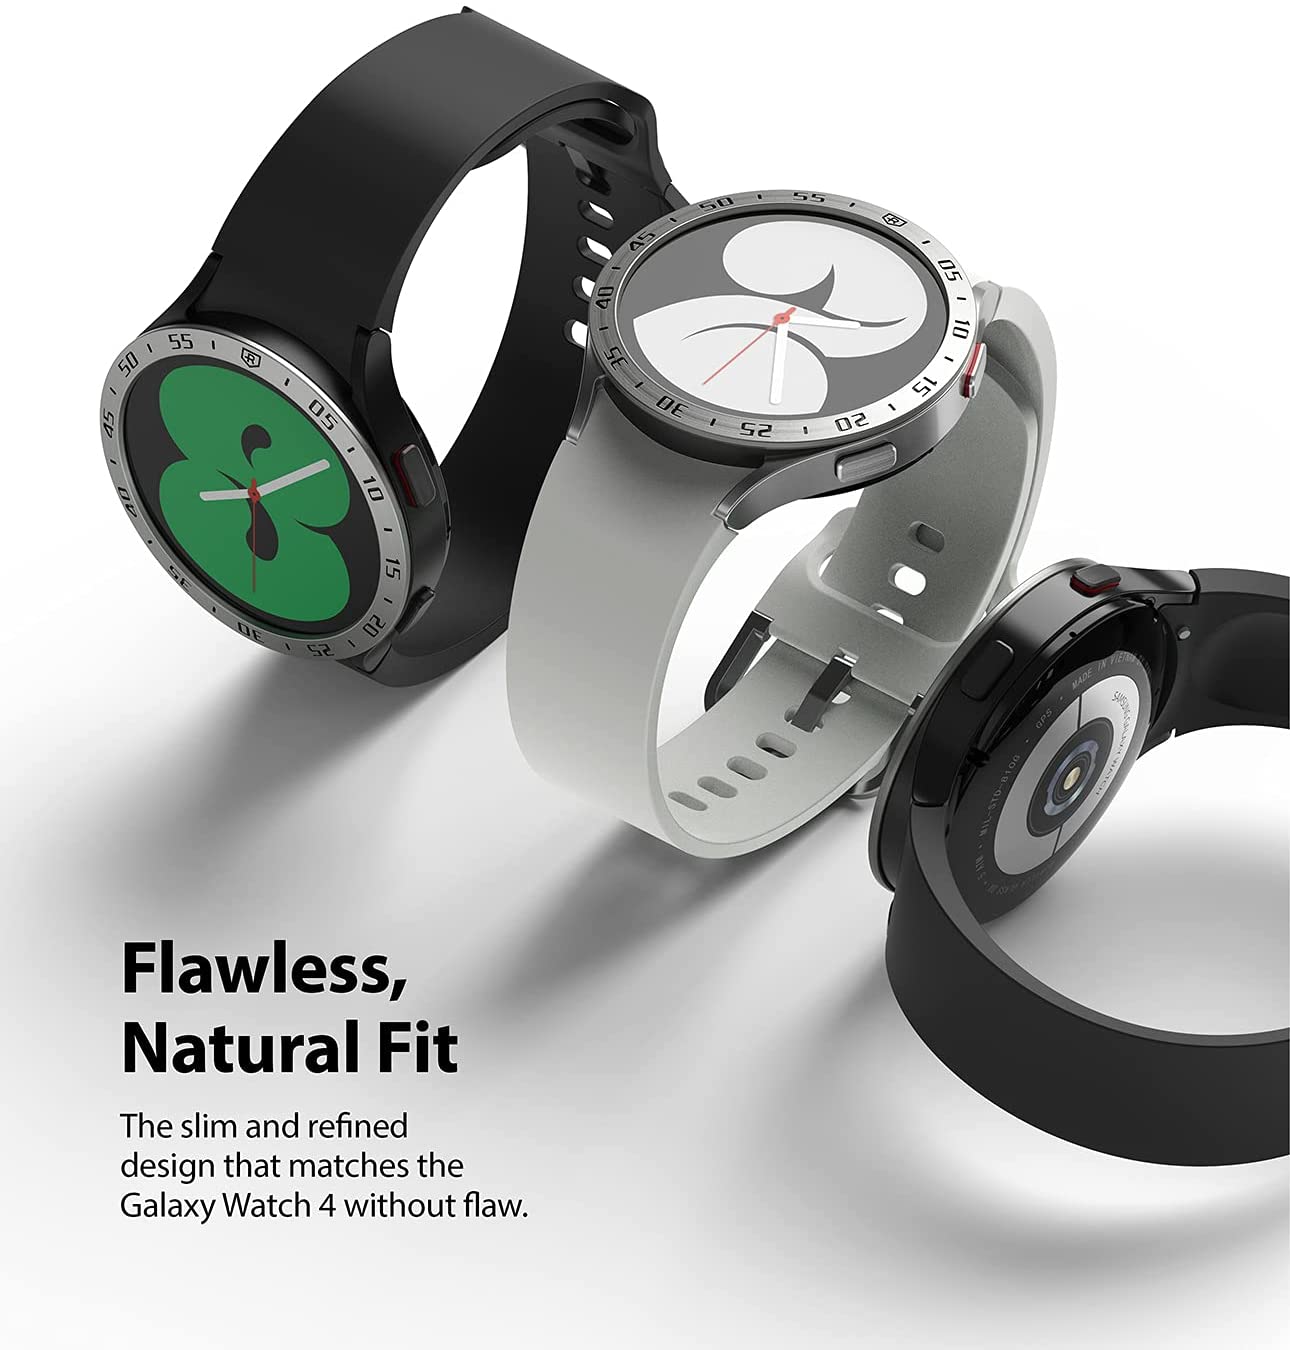 Bezel Styling Samsung Galaxy Watch 5 40mm D'argento